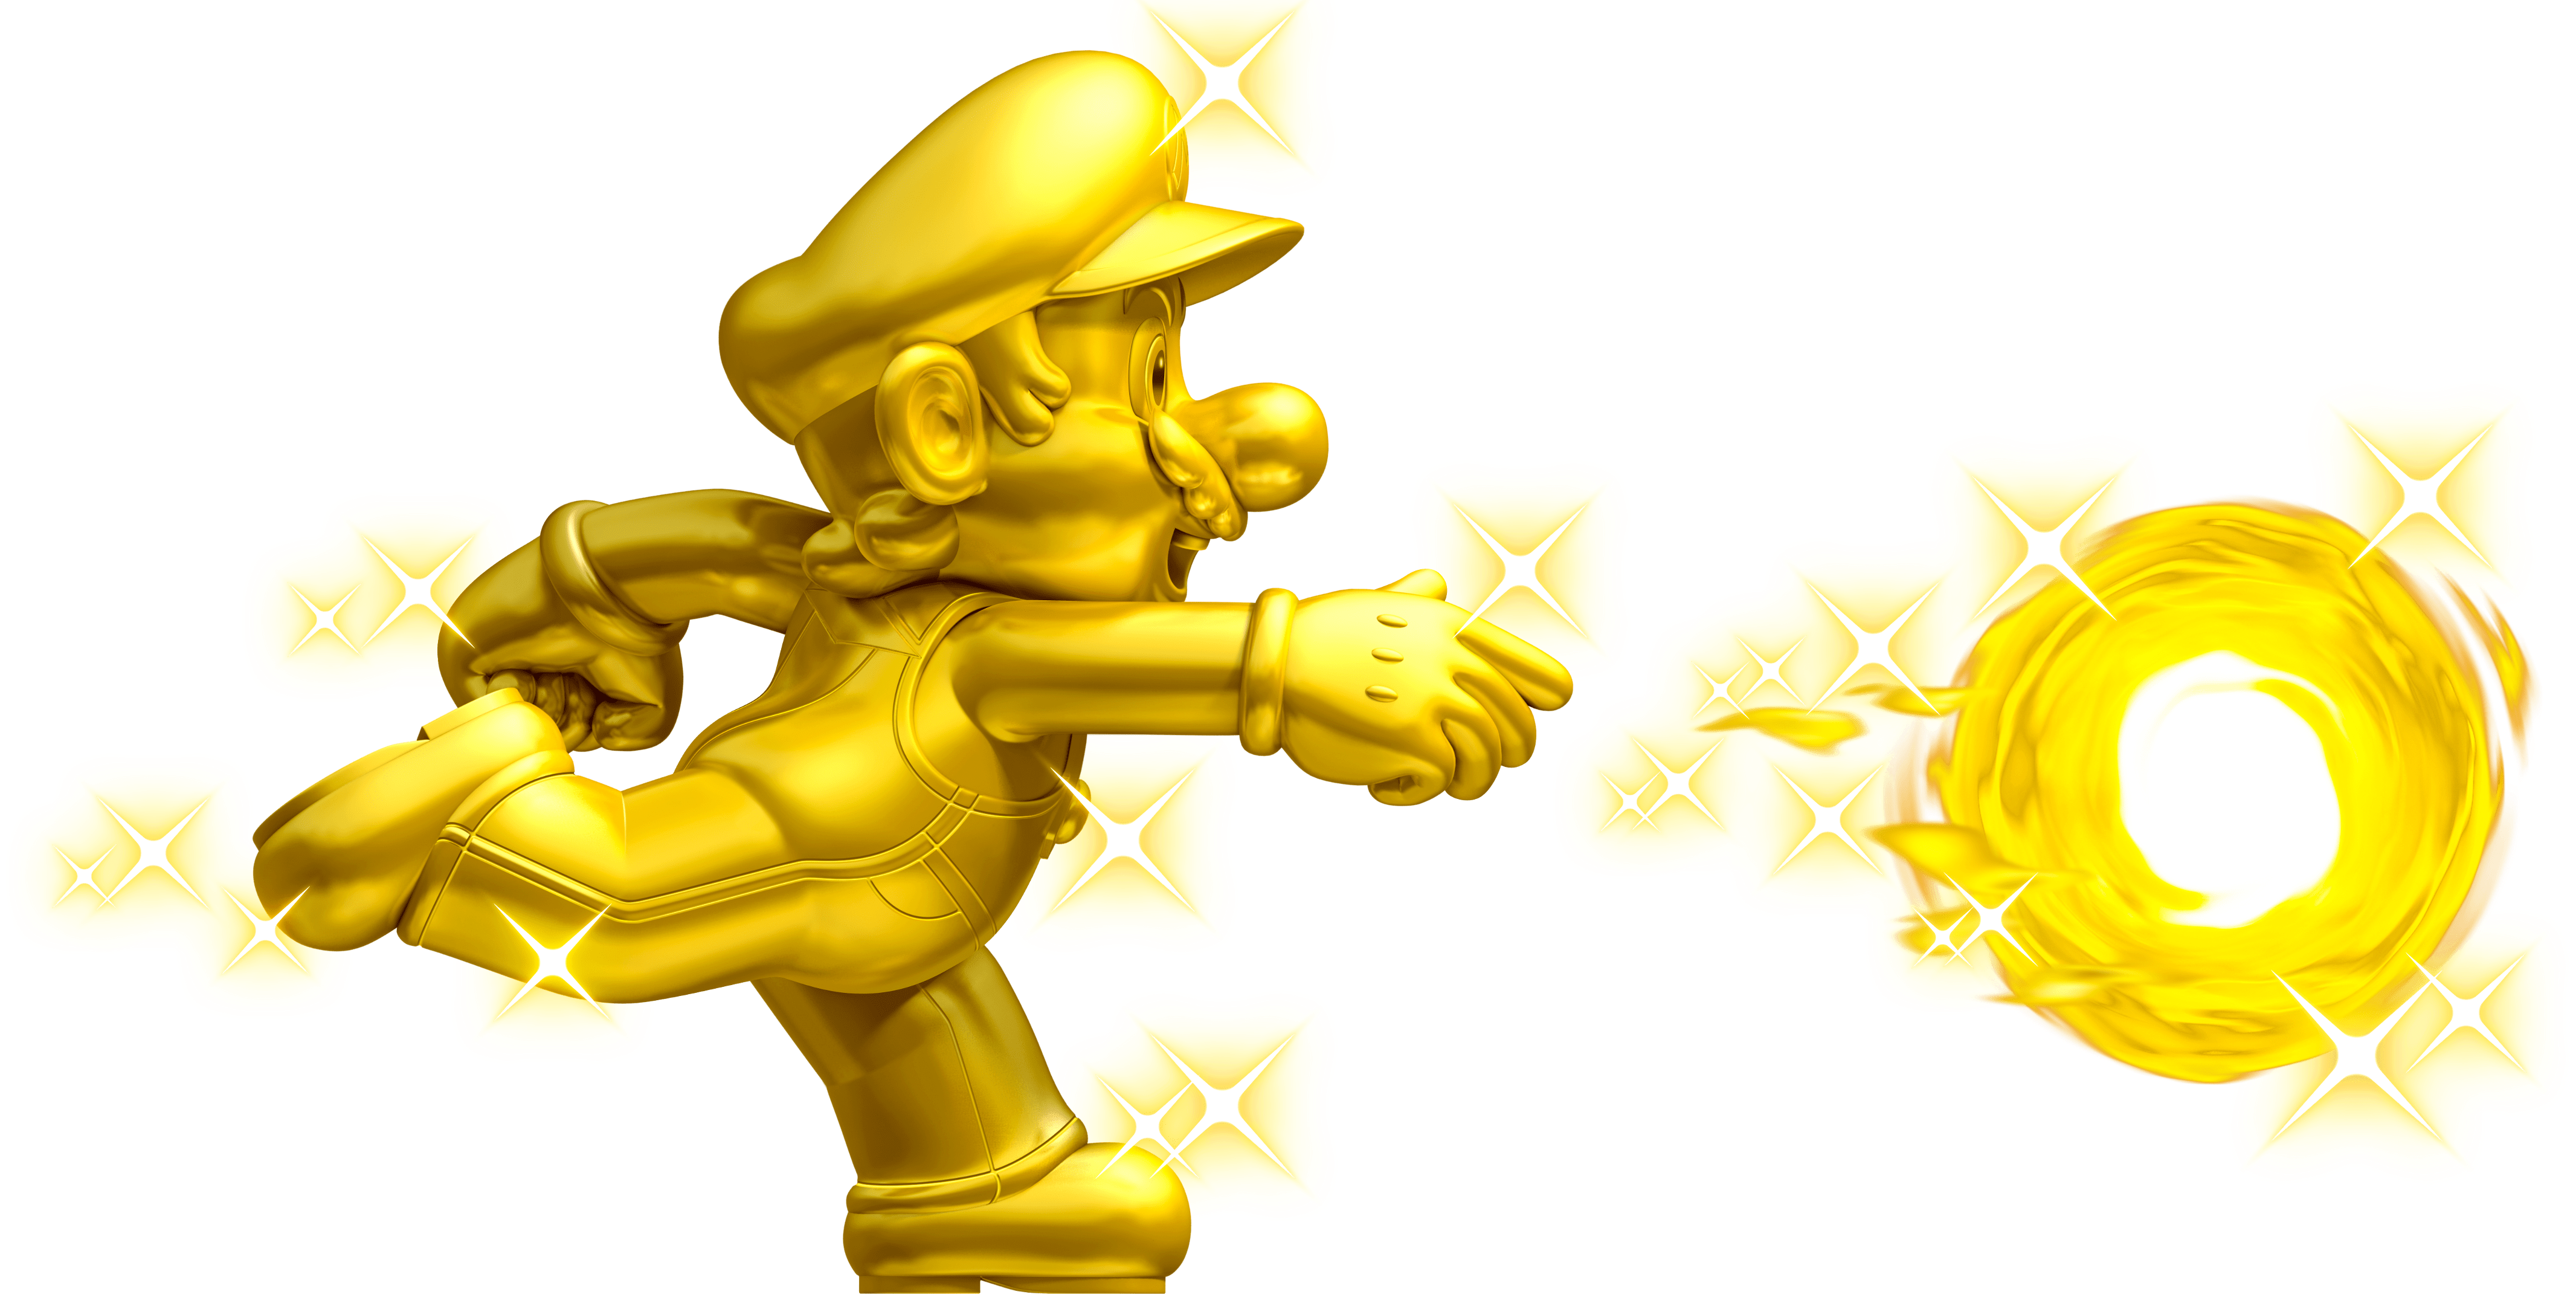 Super Mario Running PNG Image